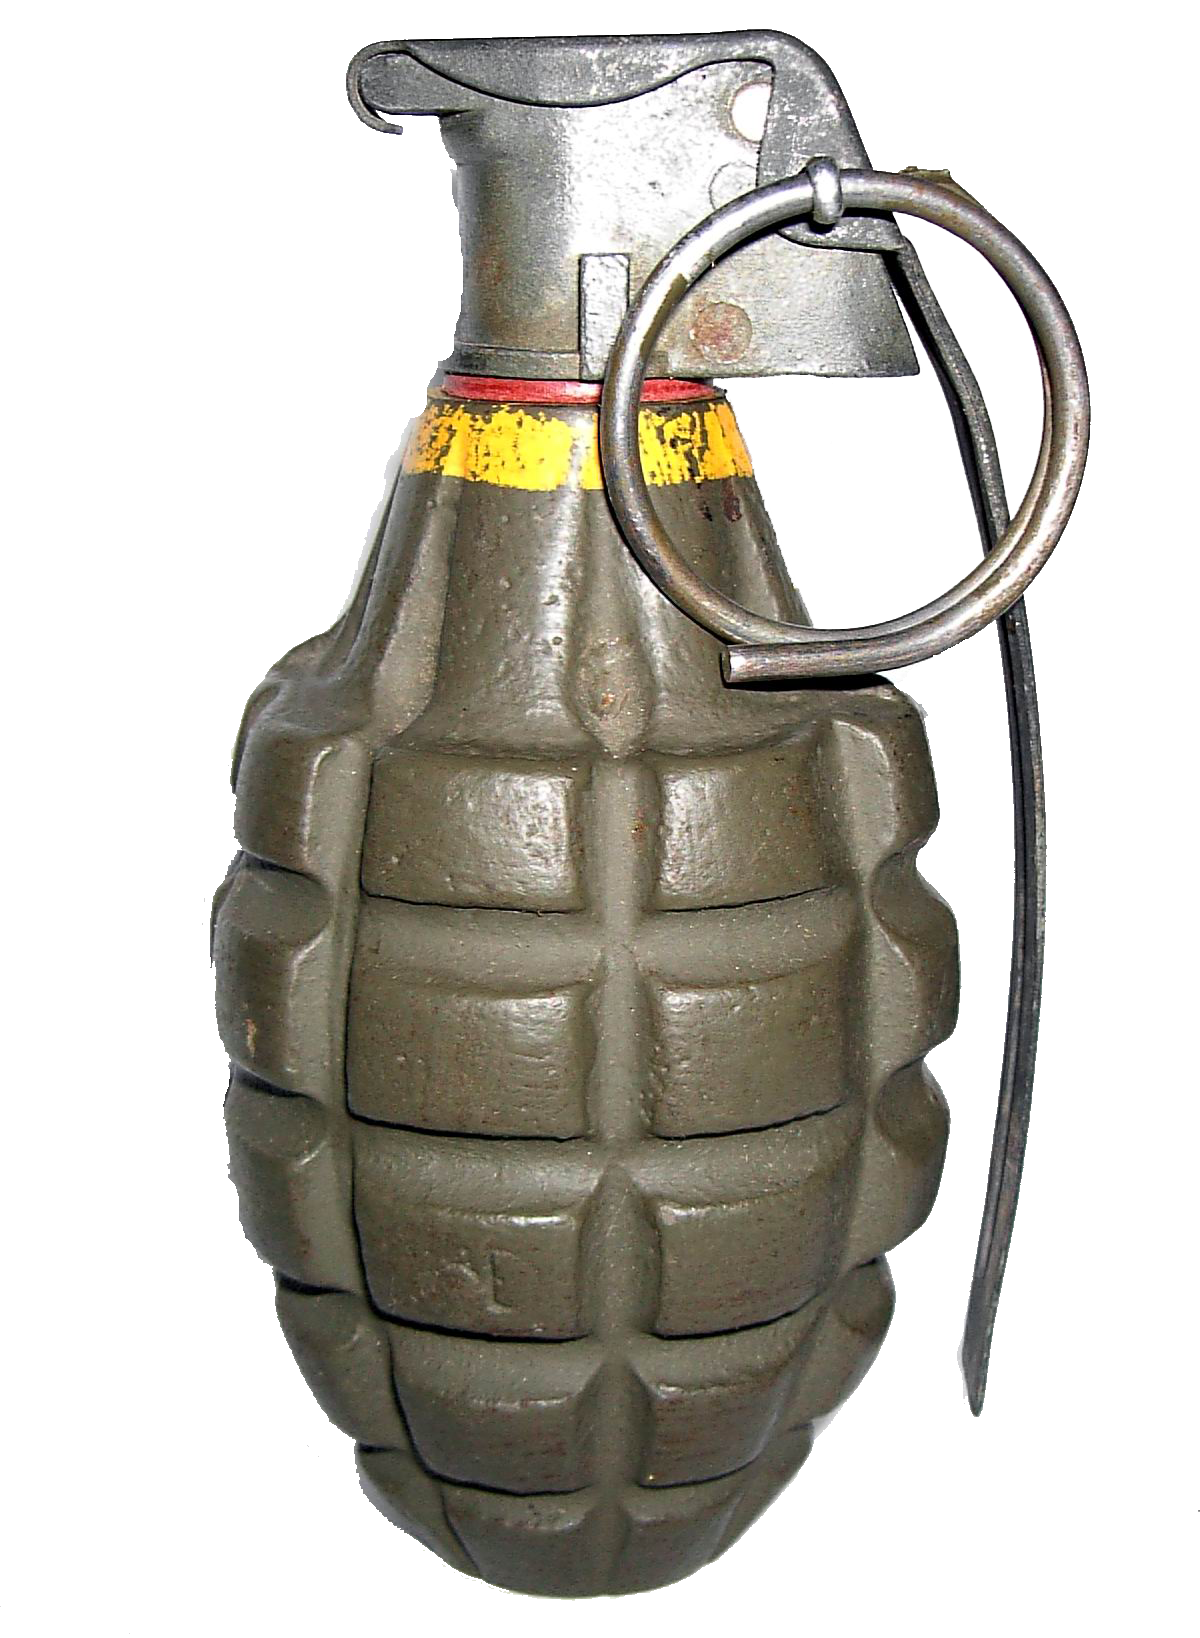 Grenade PNG images